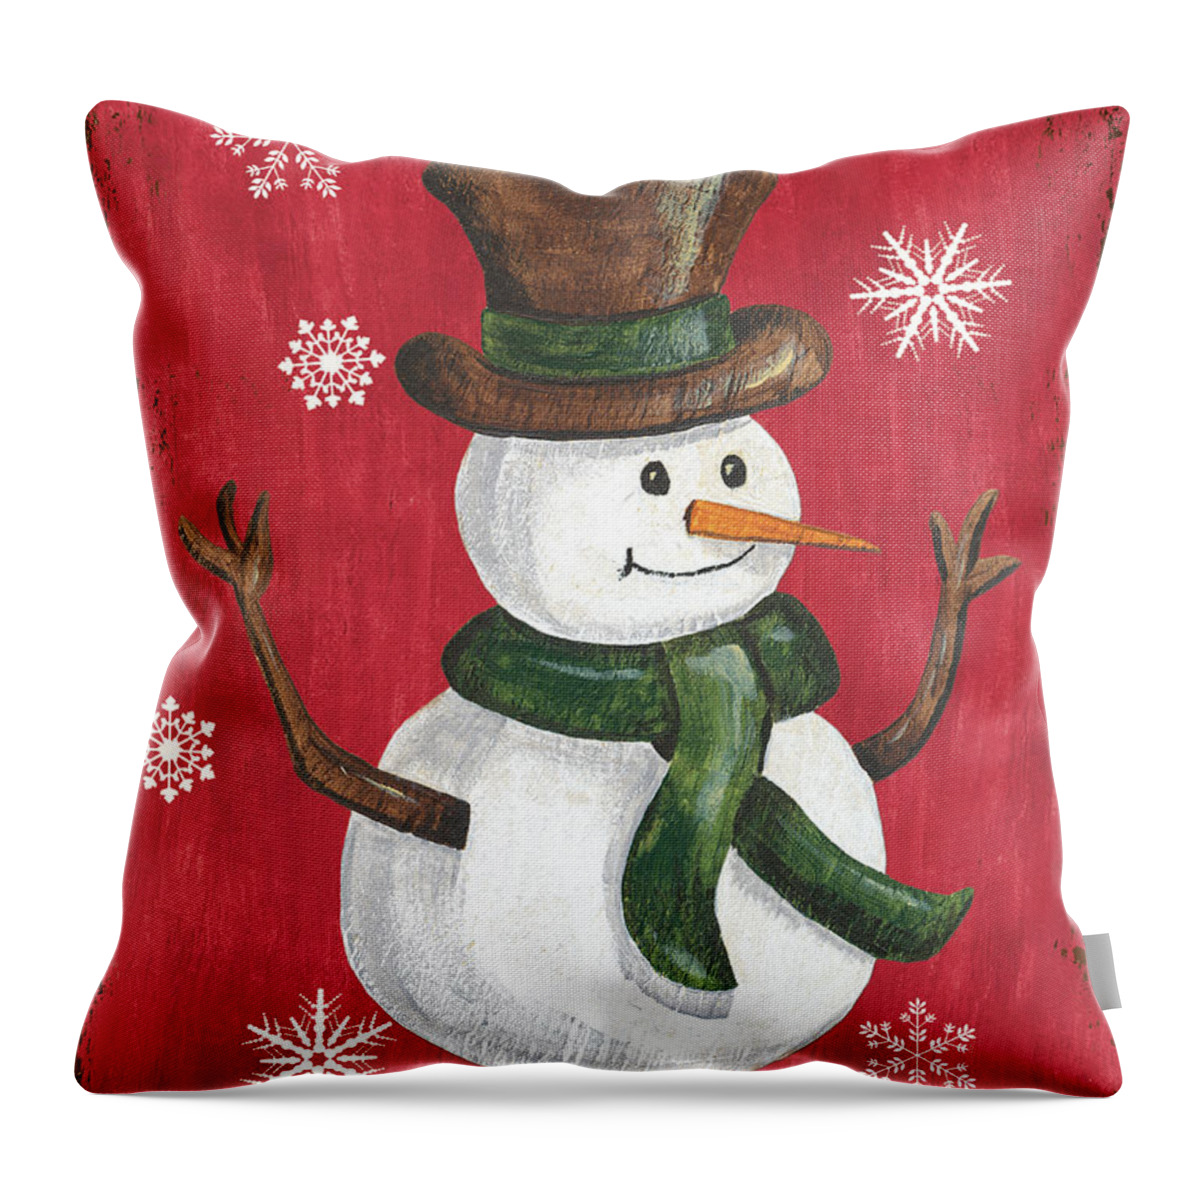 Snowman Throw Pillow featuring the painting Folk Snowman by Debbie DeWitt